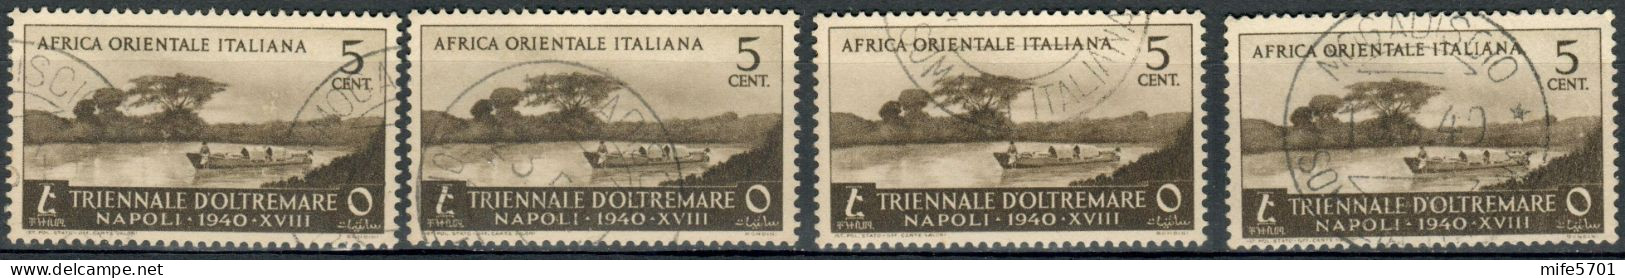 REGNO AFRICA ORIENTALE ITALIANA 1940 A.O.I. 1ª MOSTRA TRIENNALE D'OLTREMARE 4 ESEMPLARI DA C. 5 USATI - SASSONE 27 - Africa Oriental Italiana